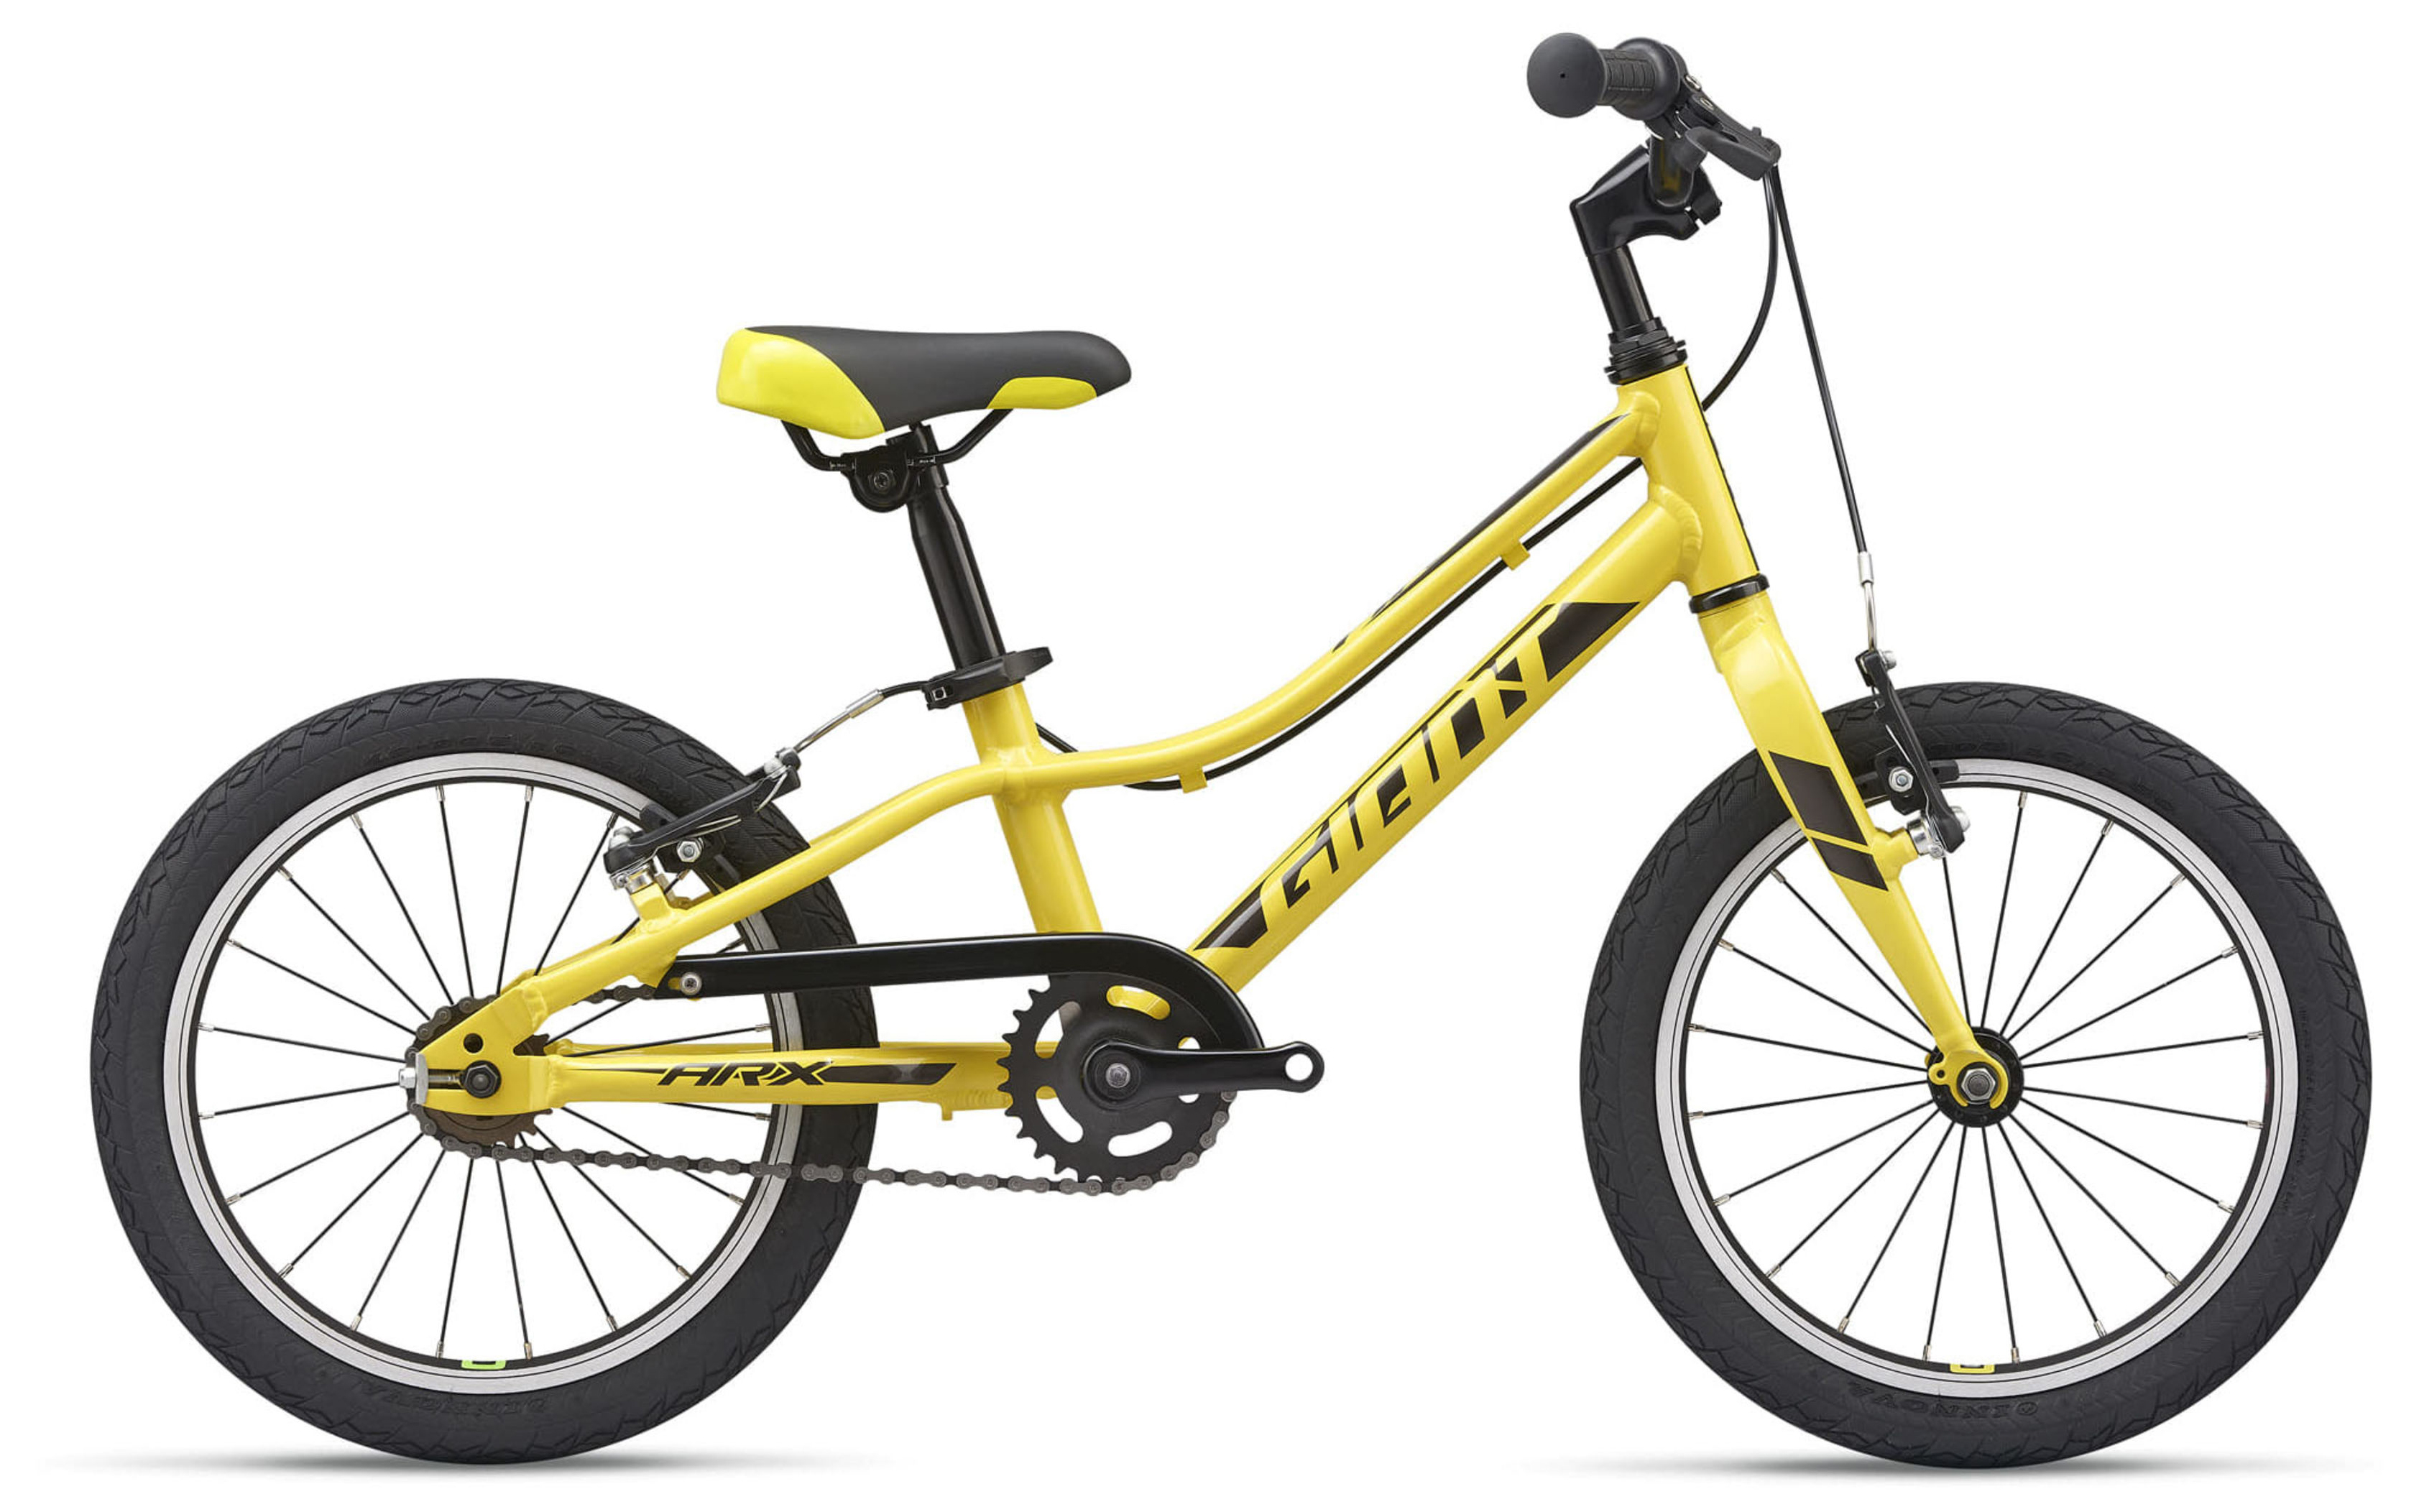  Отзывы о Детском велосипеде Giant ARX 16 F/W (2021) 2021